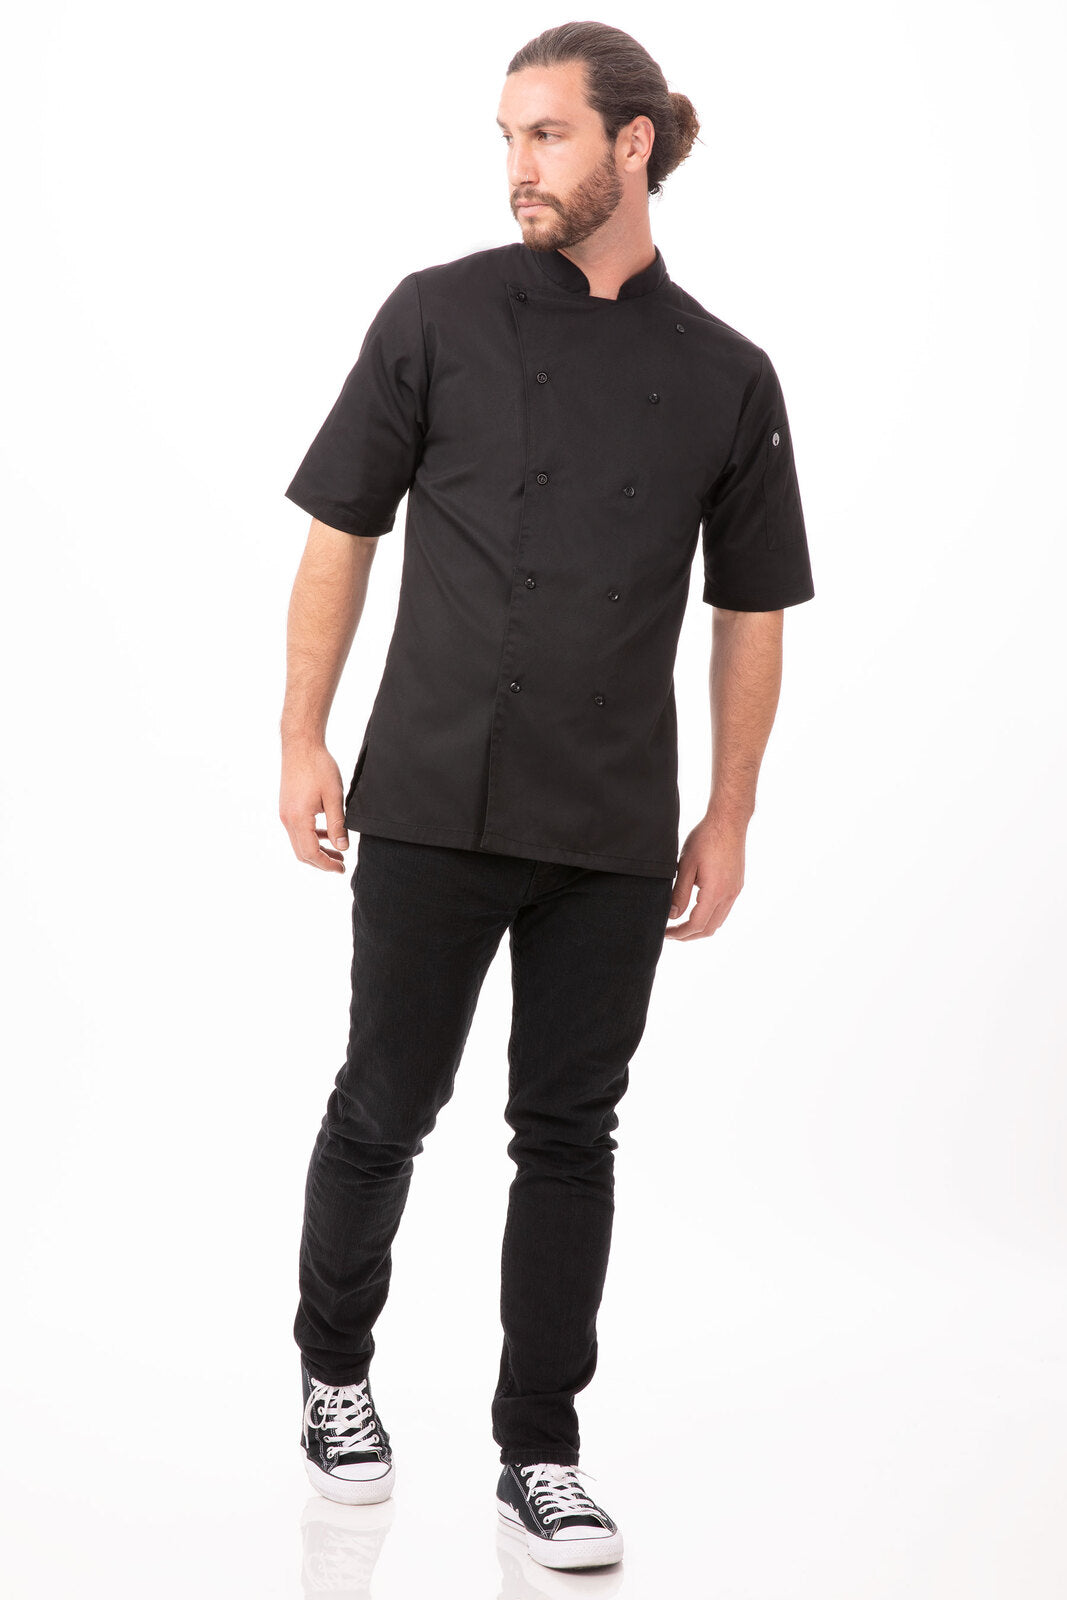 Chef Works - Avignon Bistro Shirt